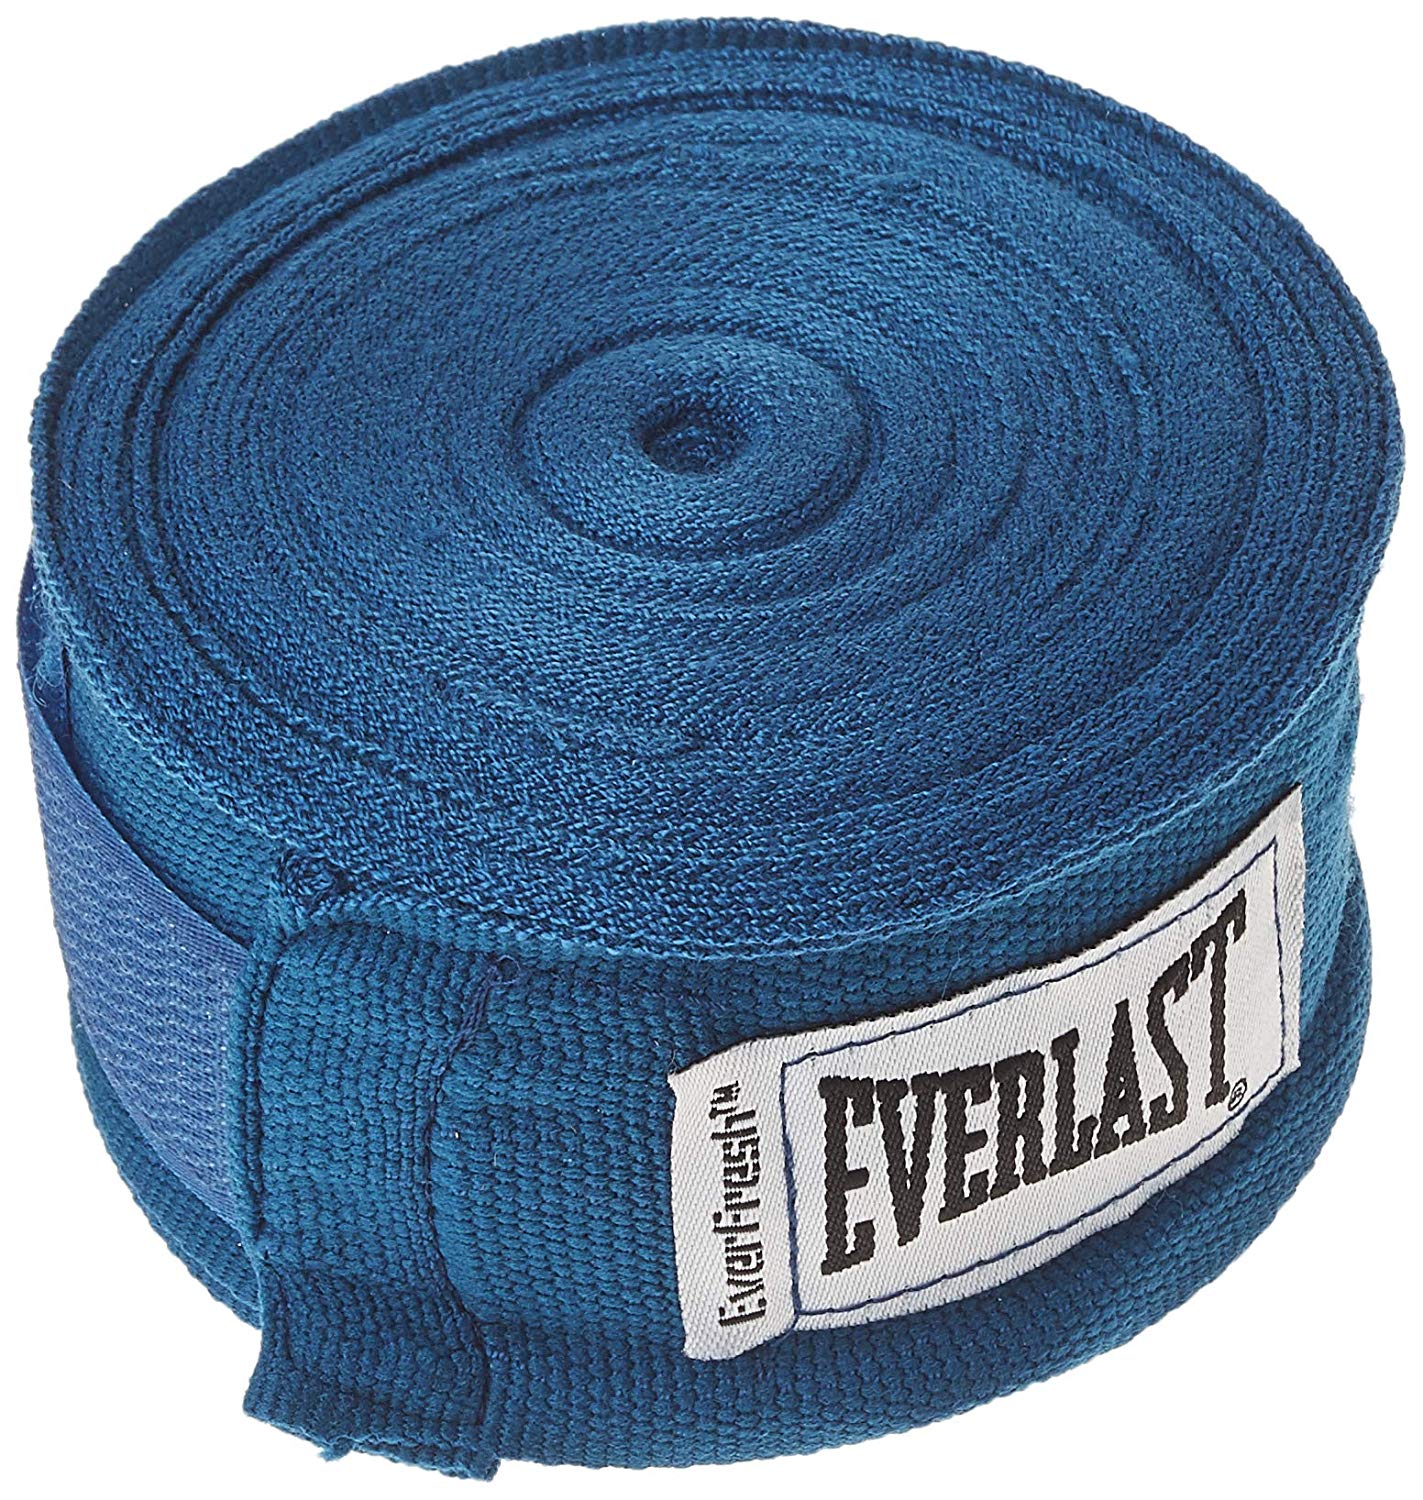 Everlast Boxing Hand Wraps (Blue, 120) - Best Price online Prokicksports.com